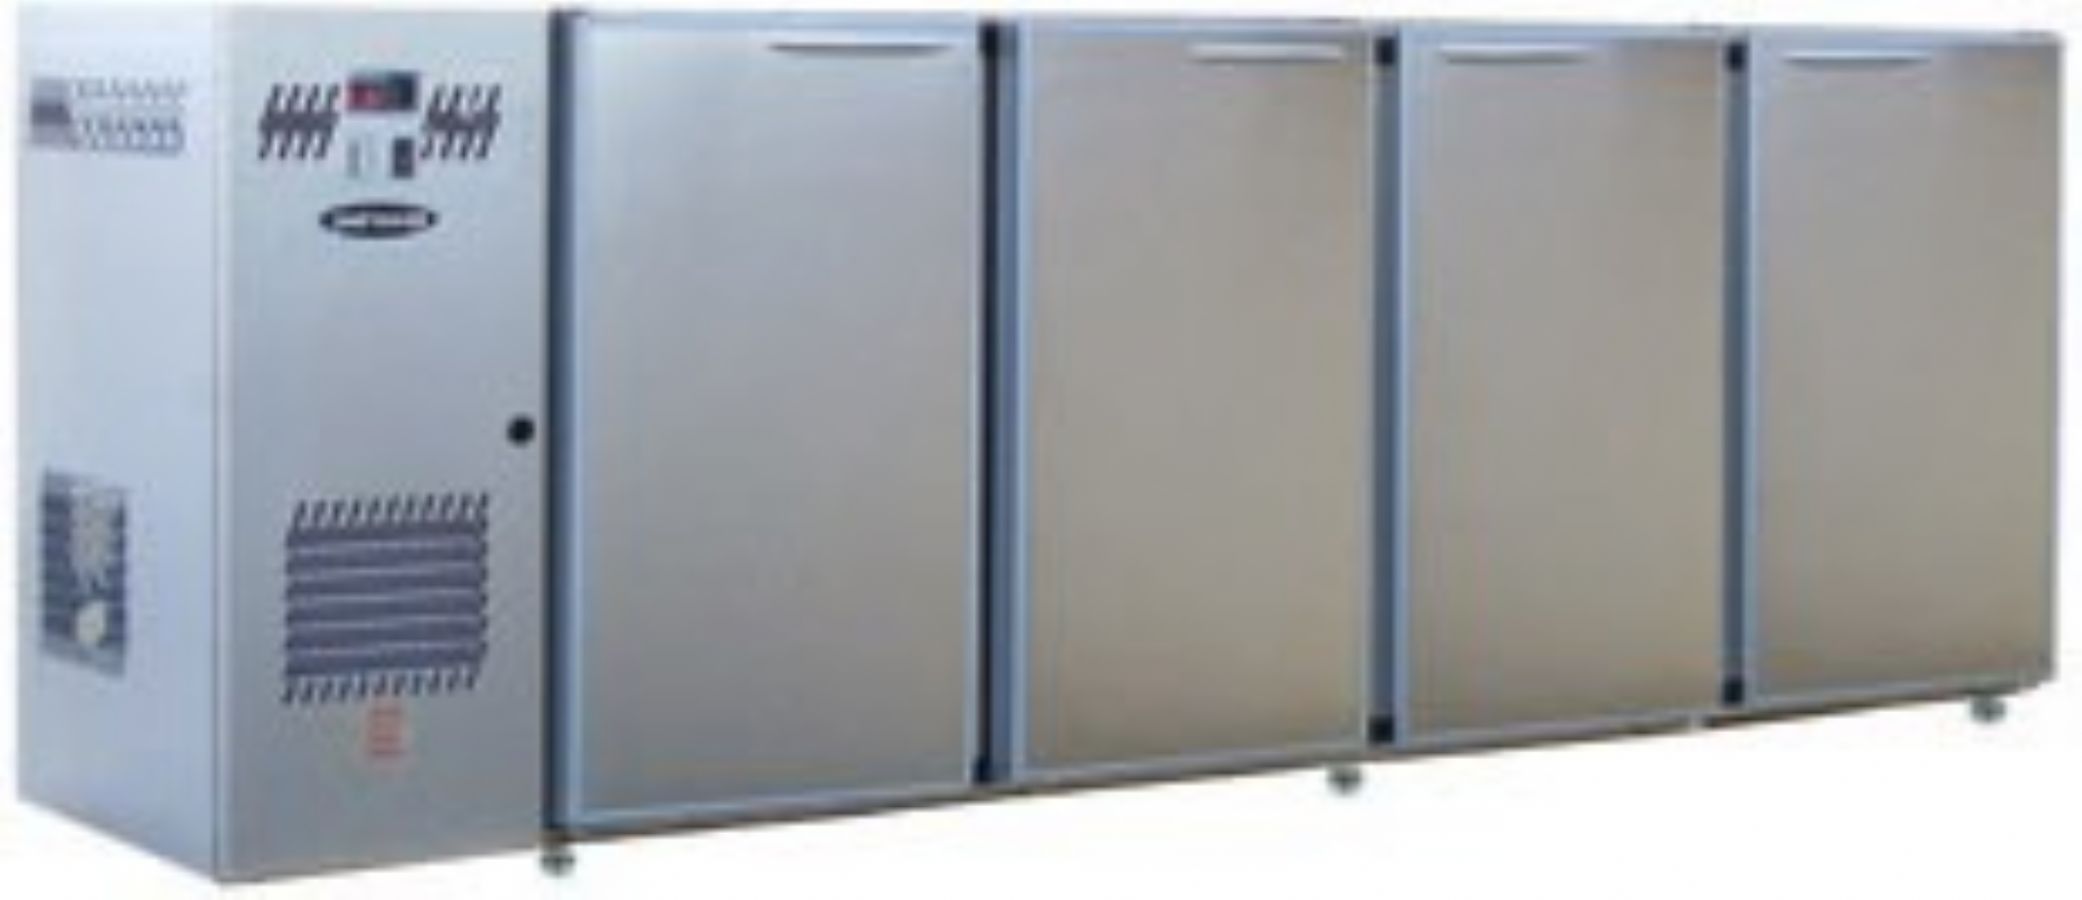 Arrire-bar Inox - Srie CLASSIC - Groupe log - 4 moyennes portes pleines - 814 litres - U74MI